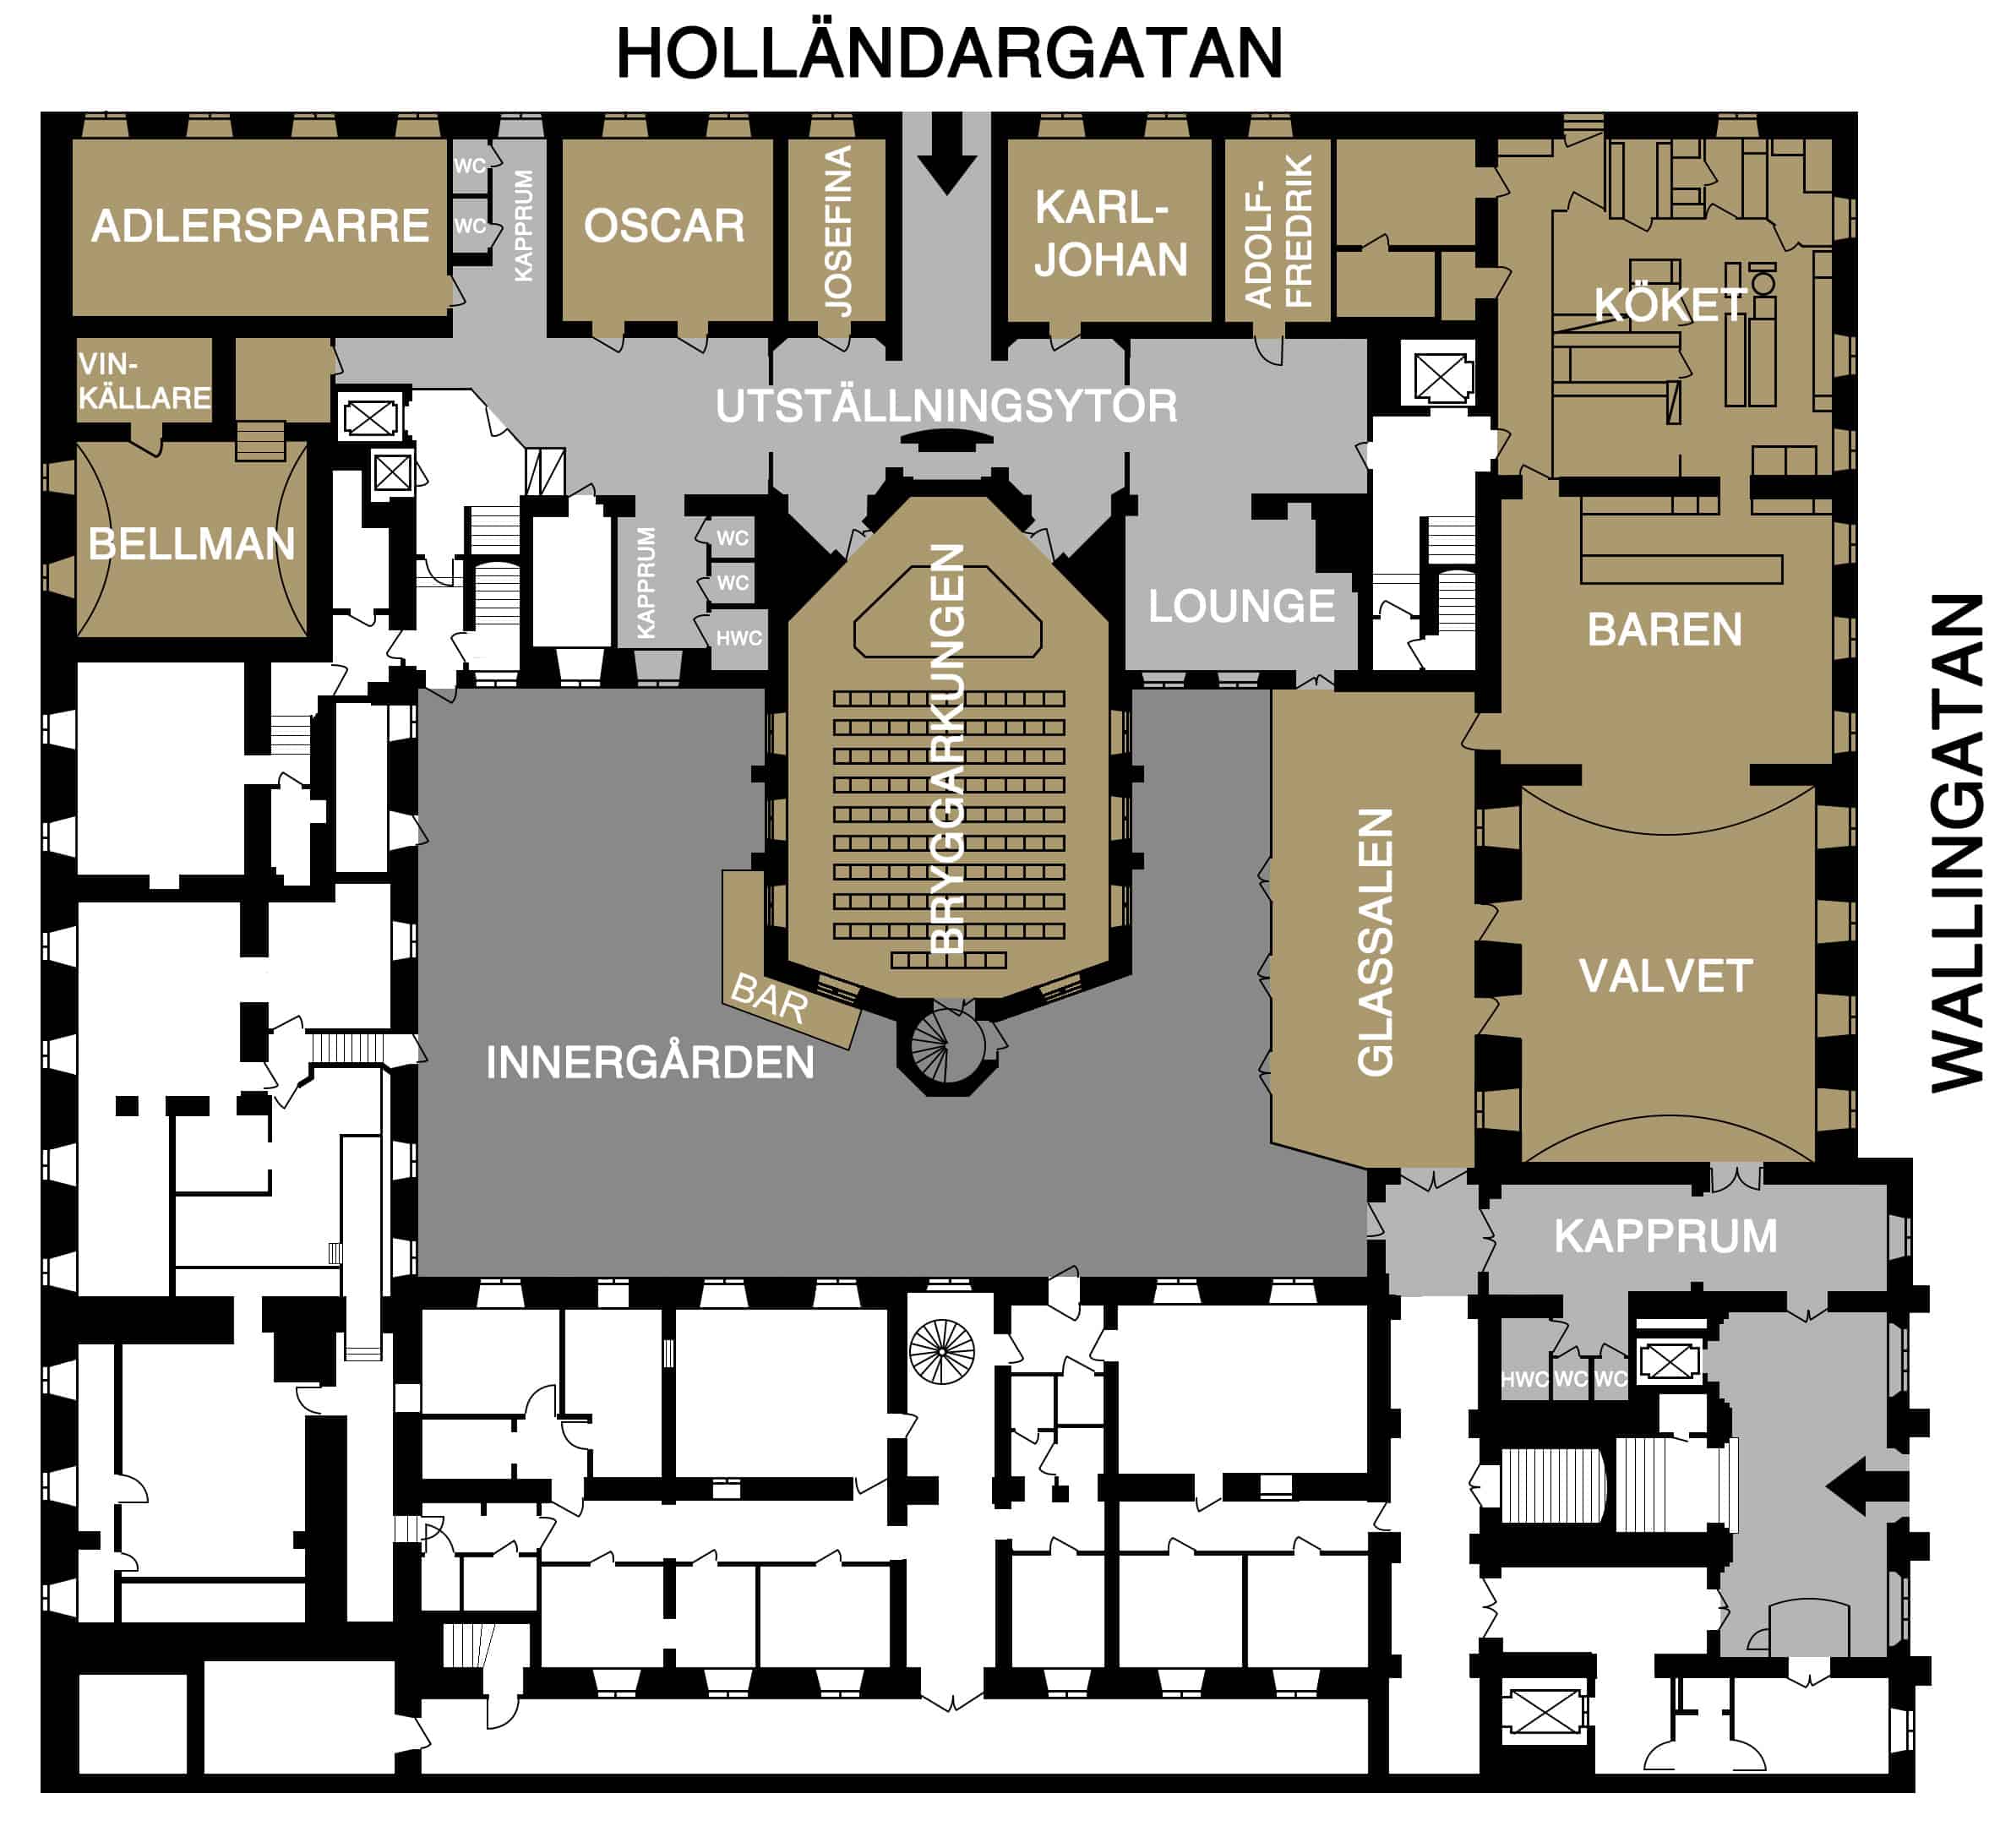 planritning konferens westmanska palatset